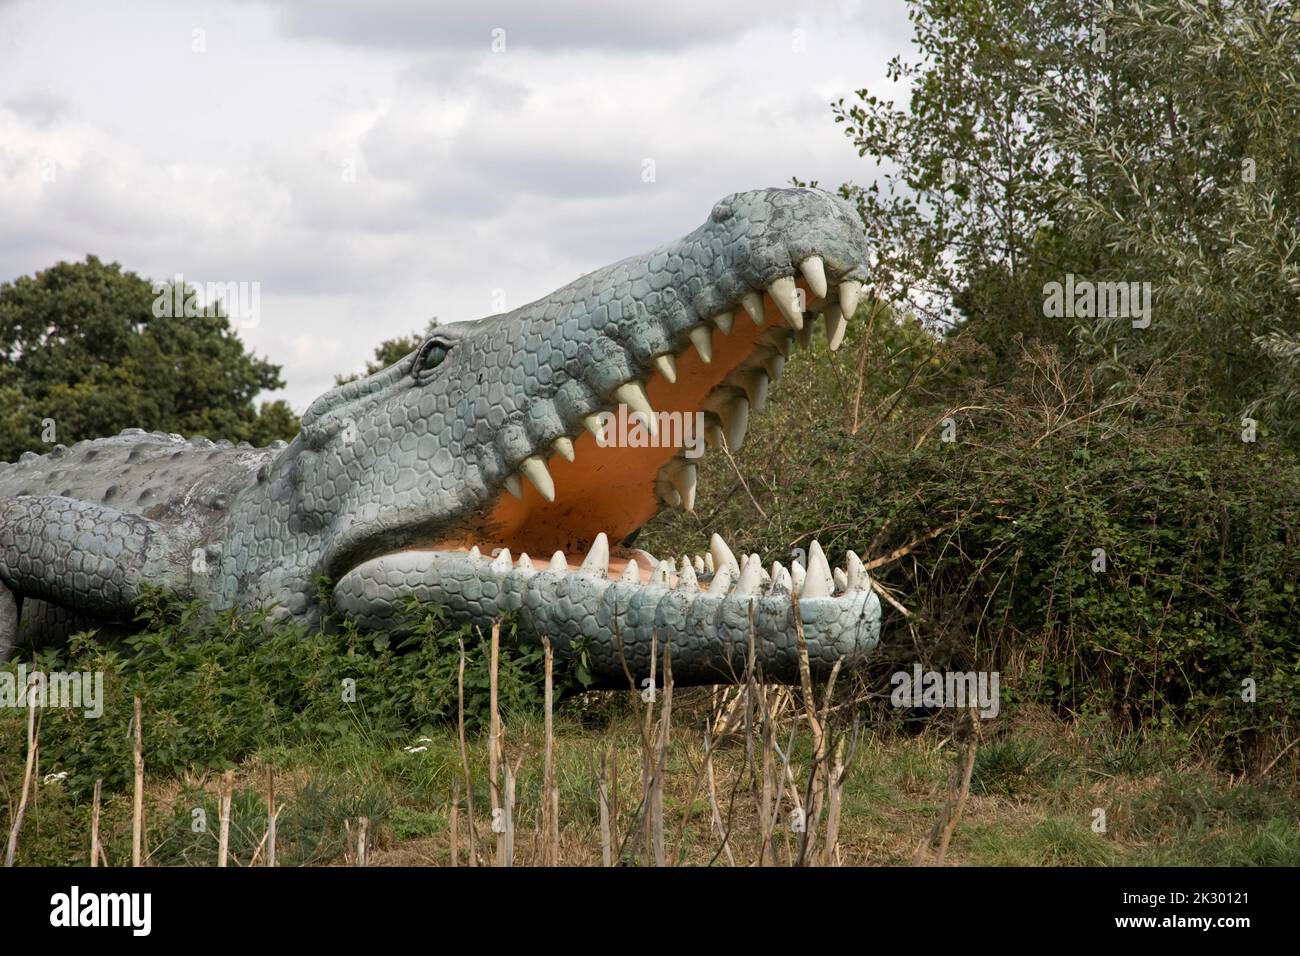 Lifesize model of Deinosuchus dinosaur an extinct genus of an alligatoroid crocodilian All Things Wild, Honeybourne, UK Stock Photo